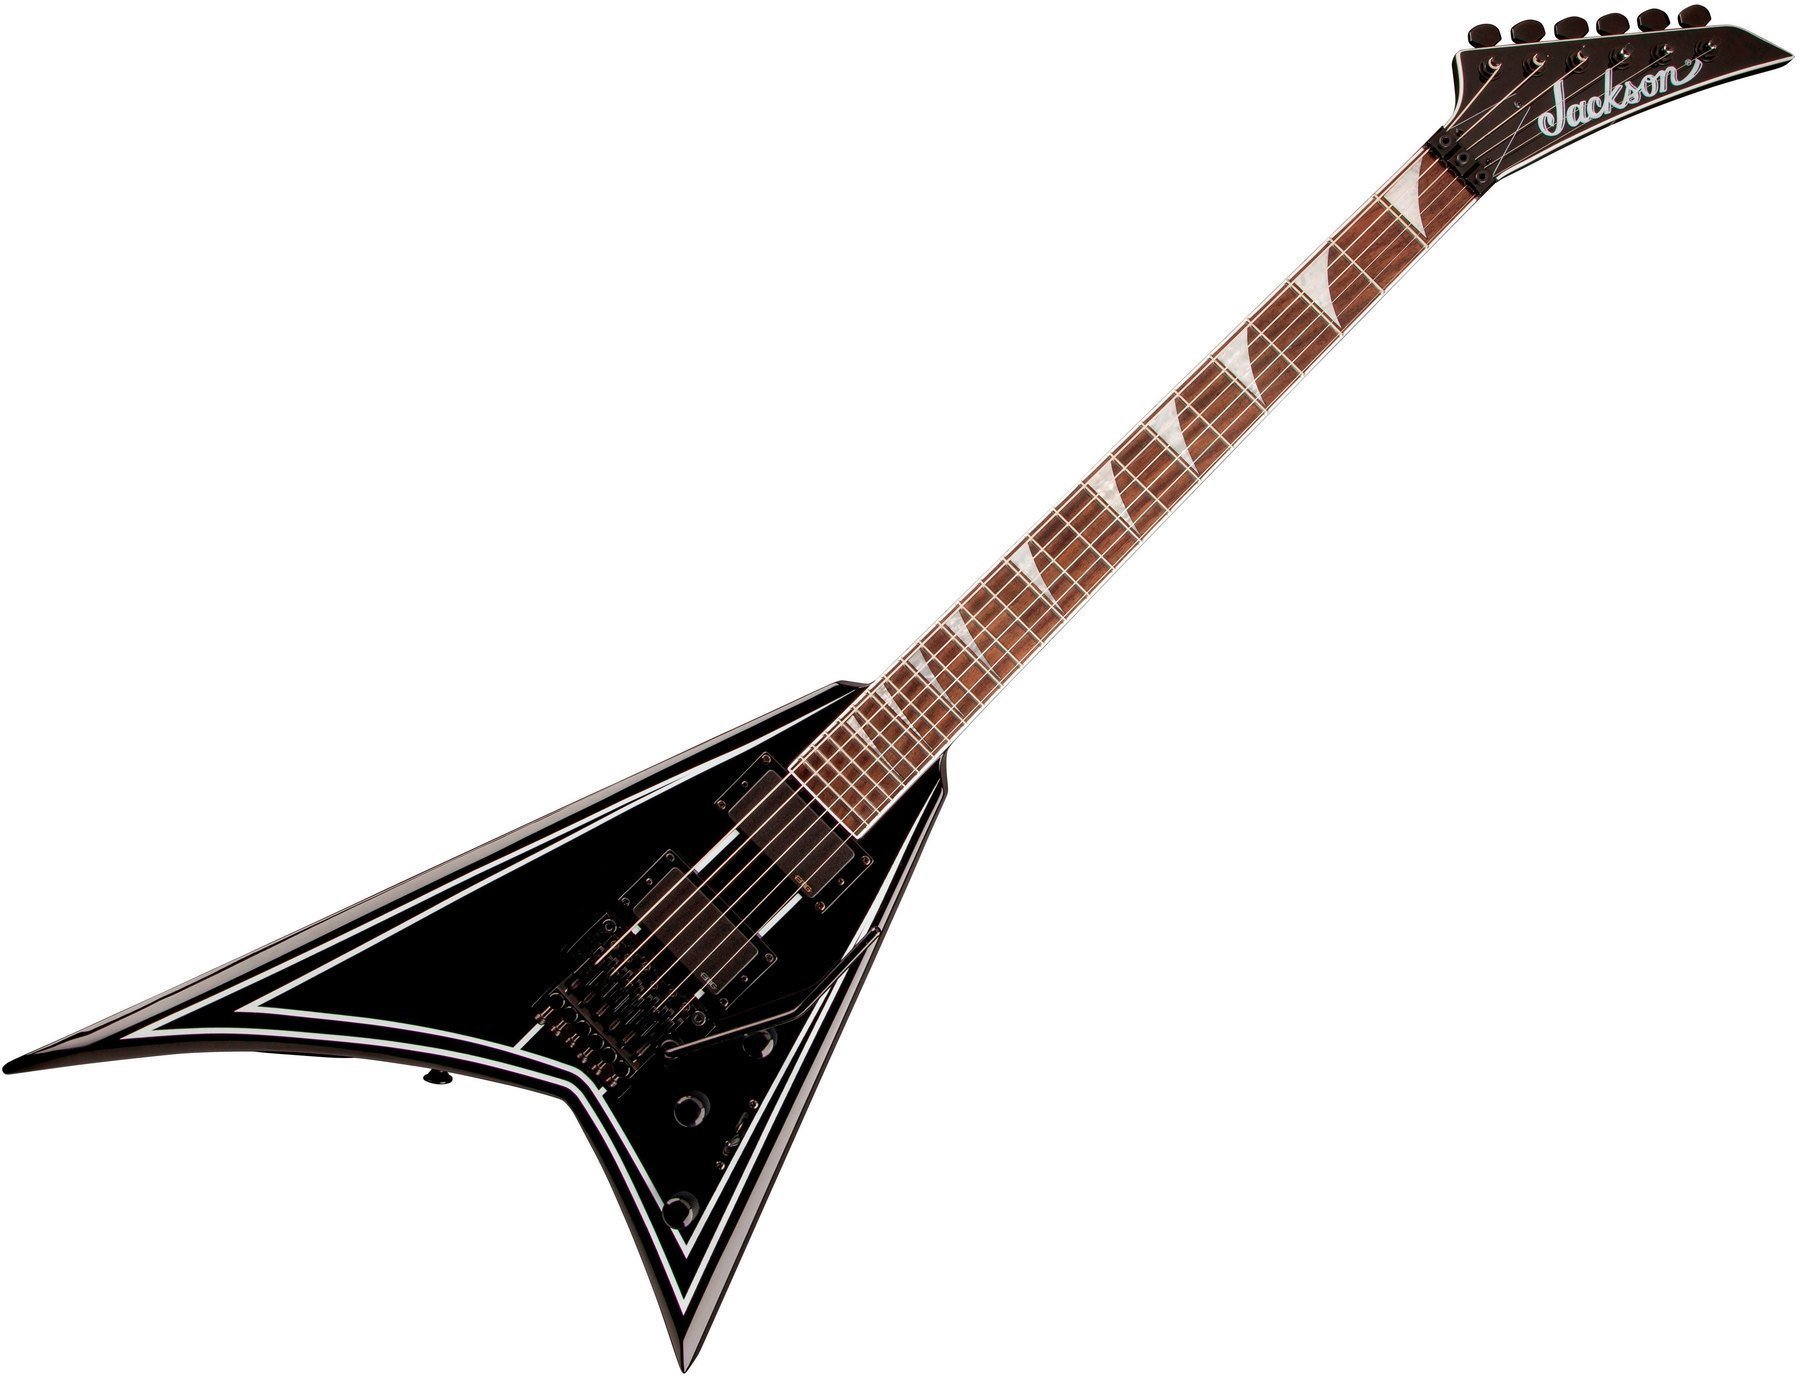 Elektrische gitaar Jackson Rhoads RRXMG Black with White Pintstripe